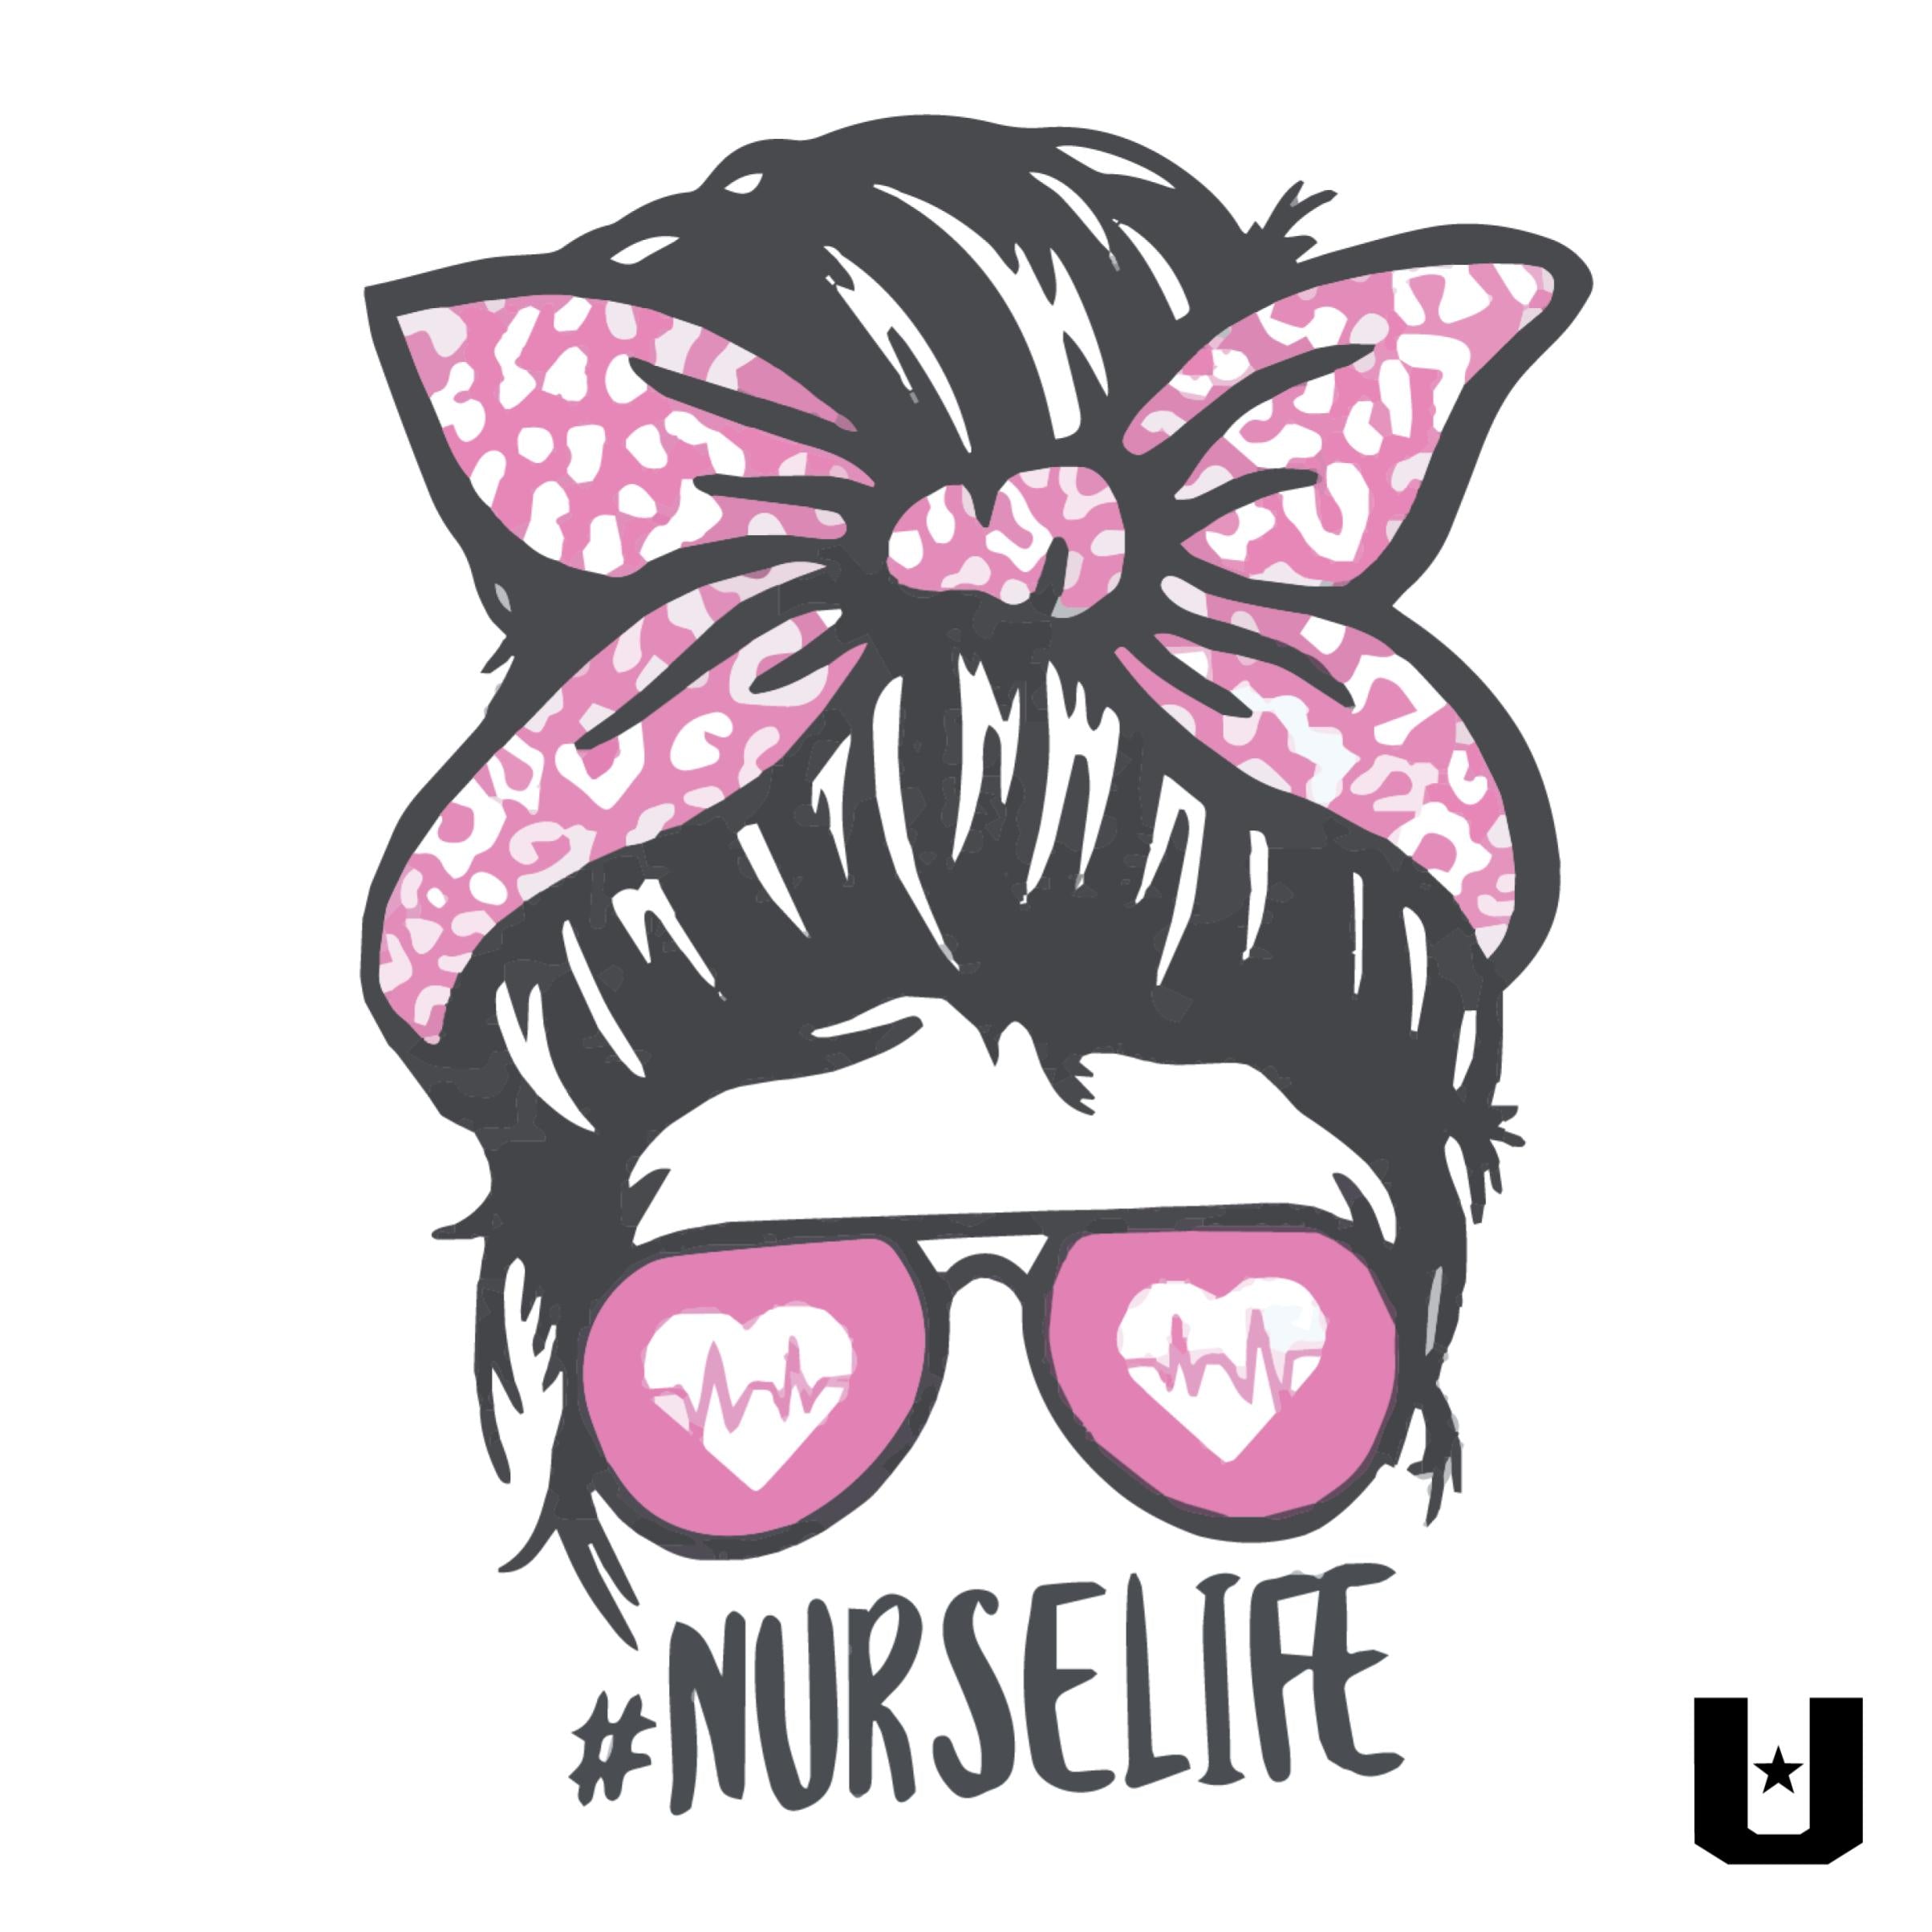 Nurse Life Bun Tshirt